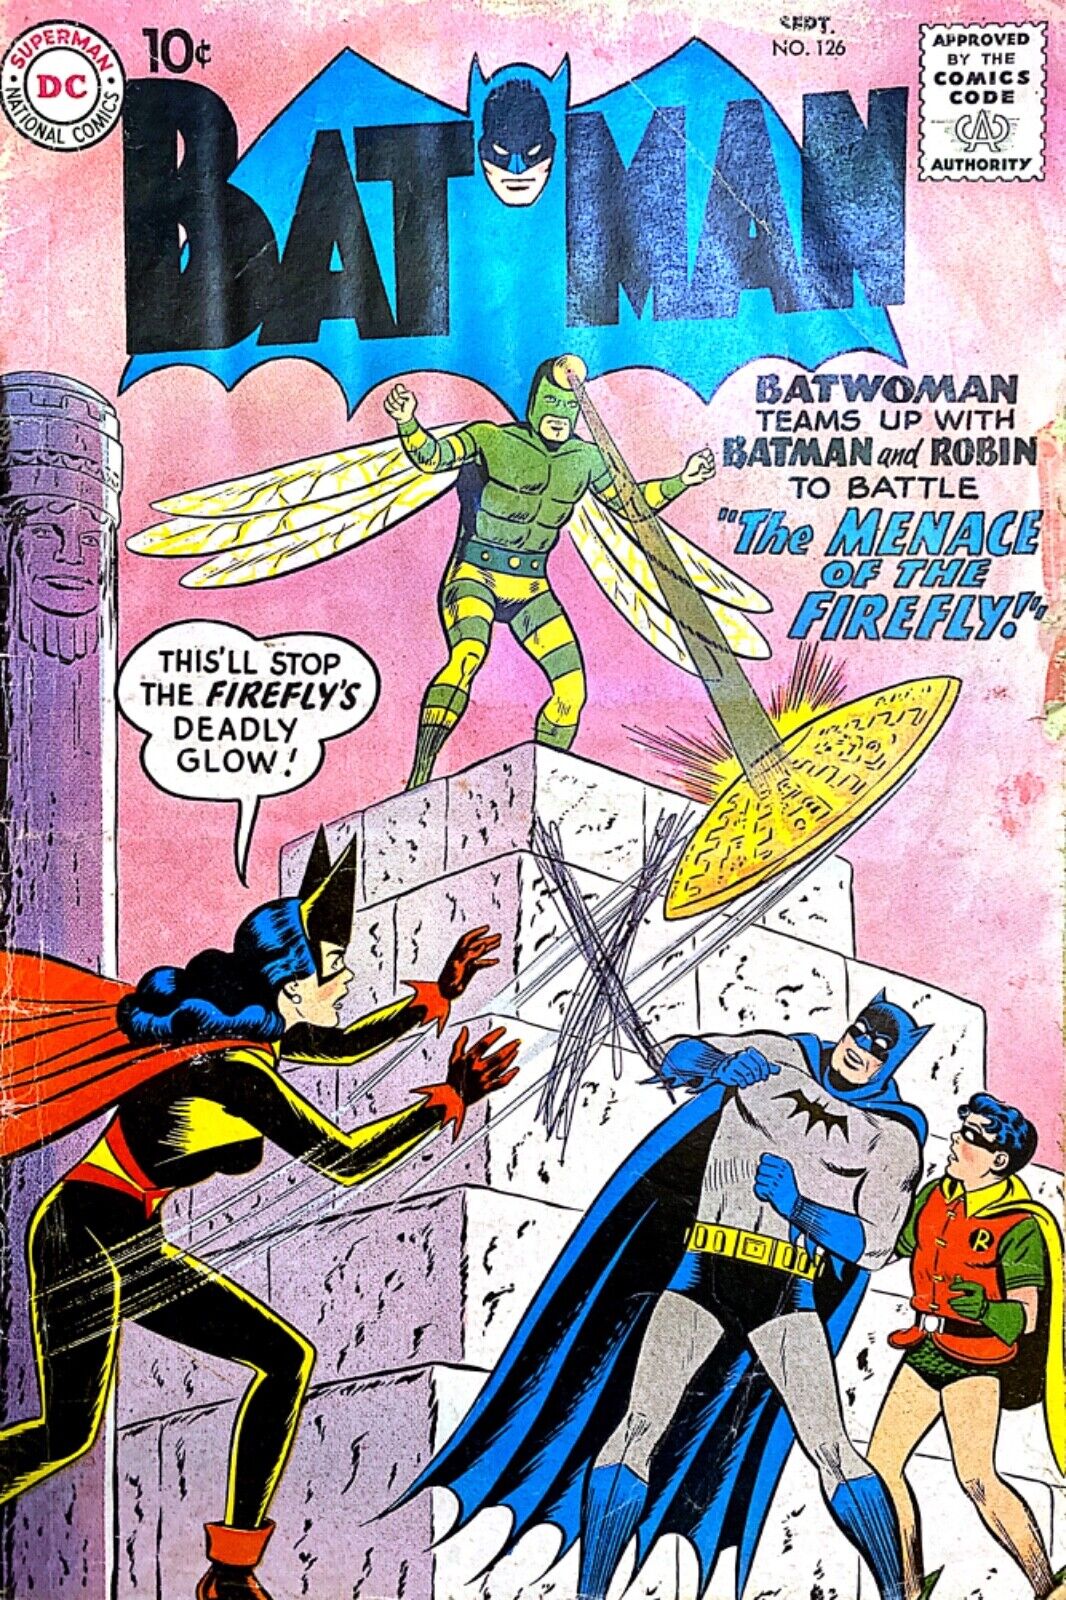 Batman #126 (1959) - Good/Very good (3.0)